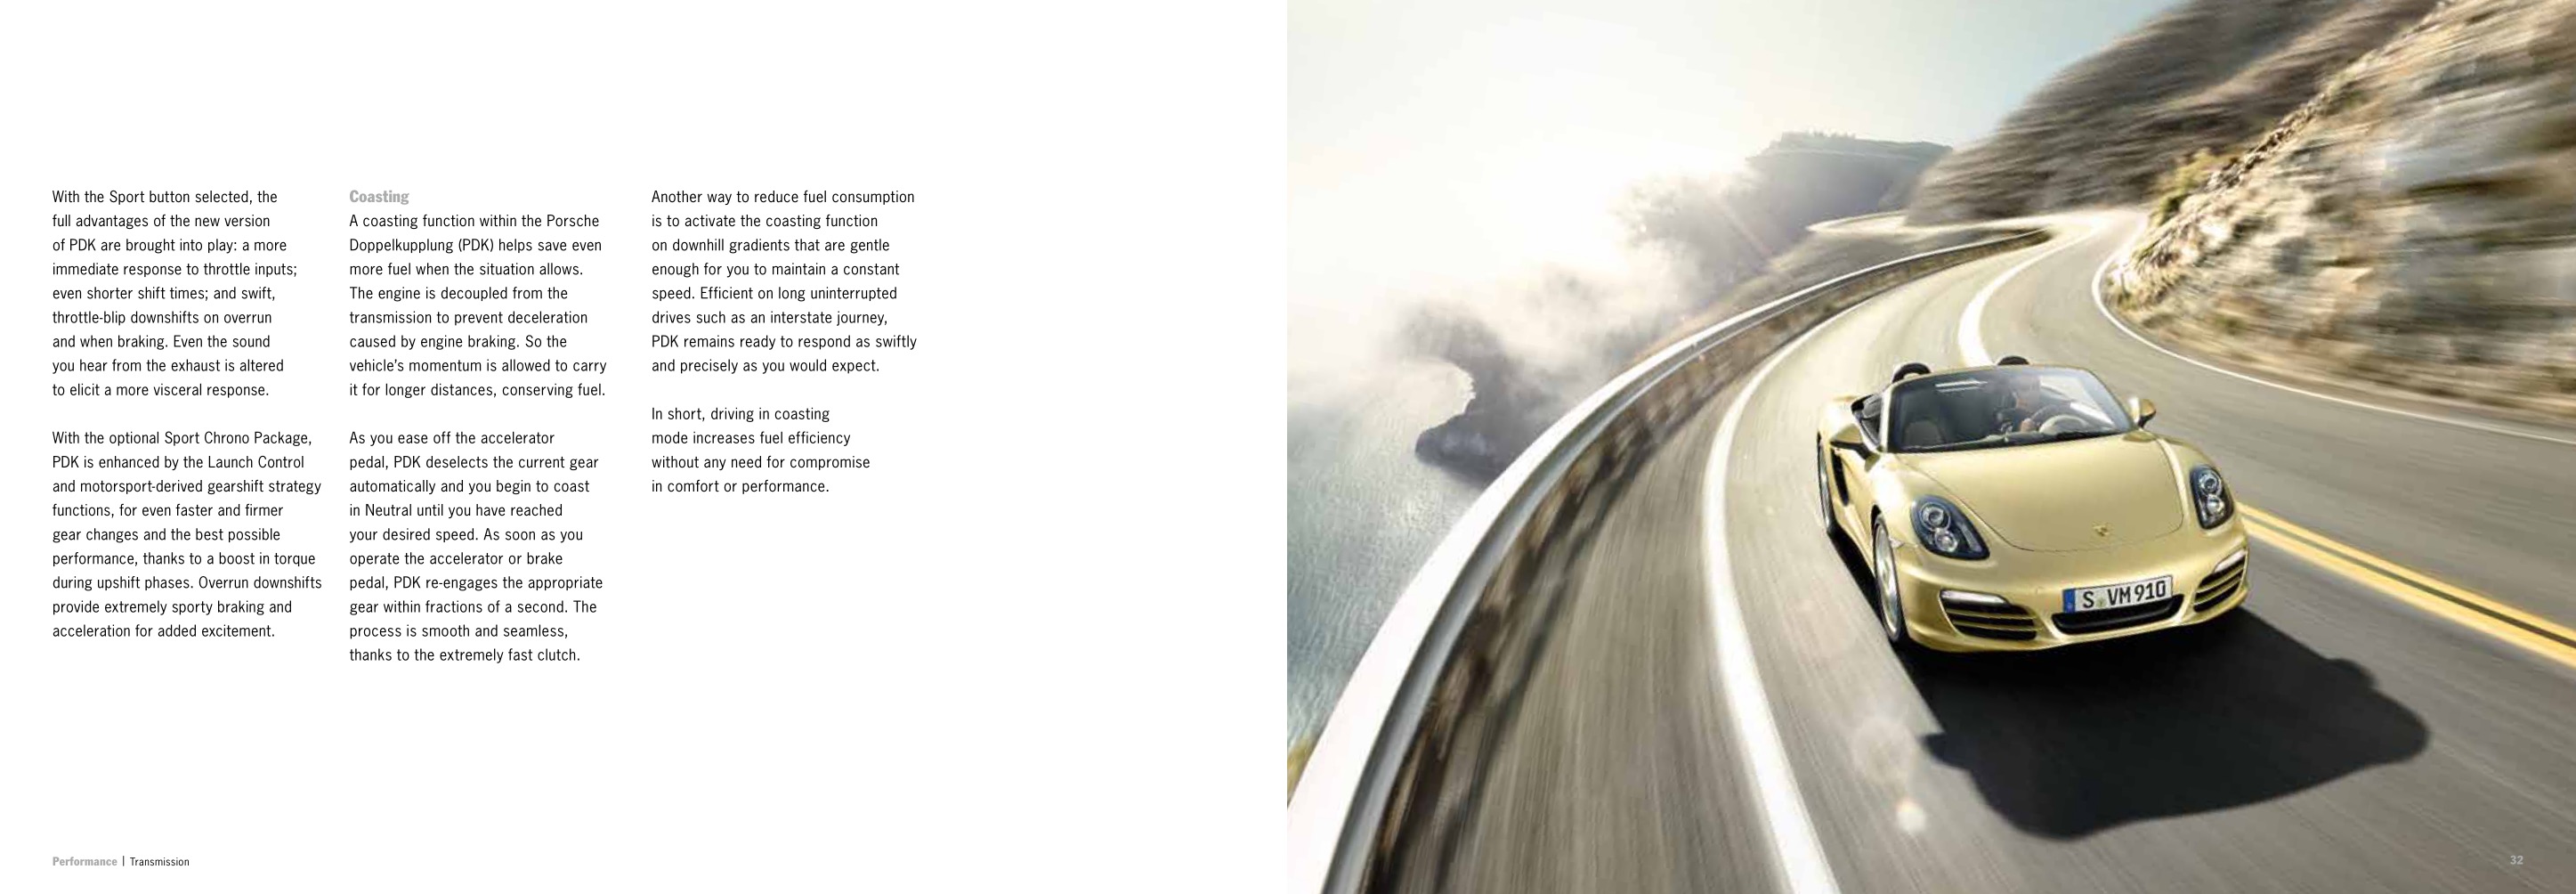 2013 Porsche Boxster Brochure Page 54